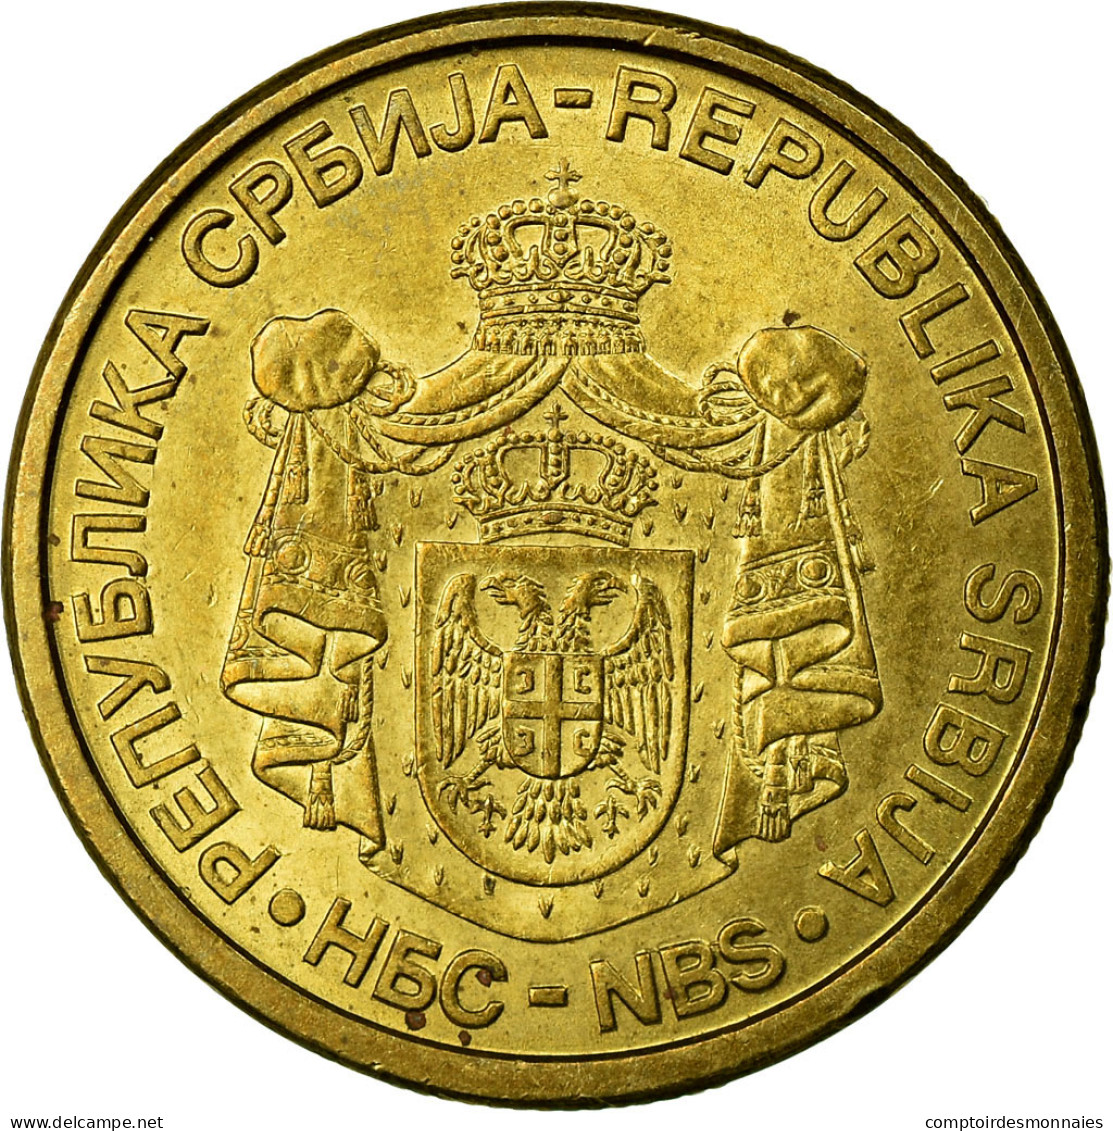 Monnaie, Serbie, Dinar, 2008, TTB, Nickel-brass, KM:39 - Serbie